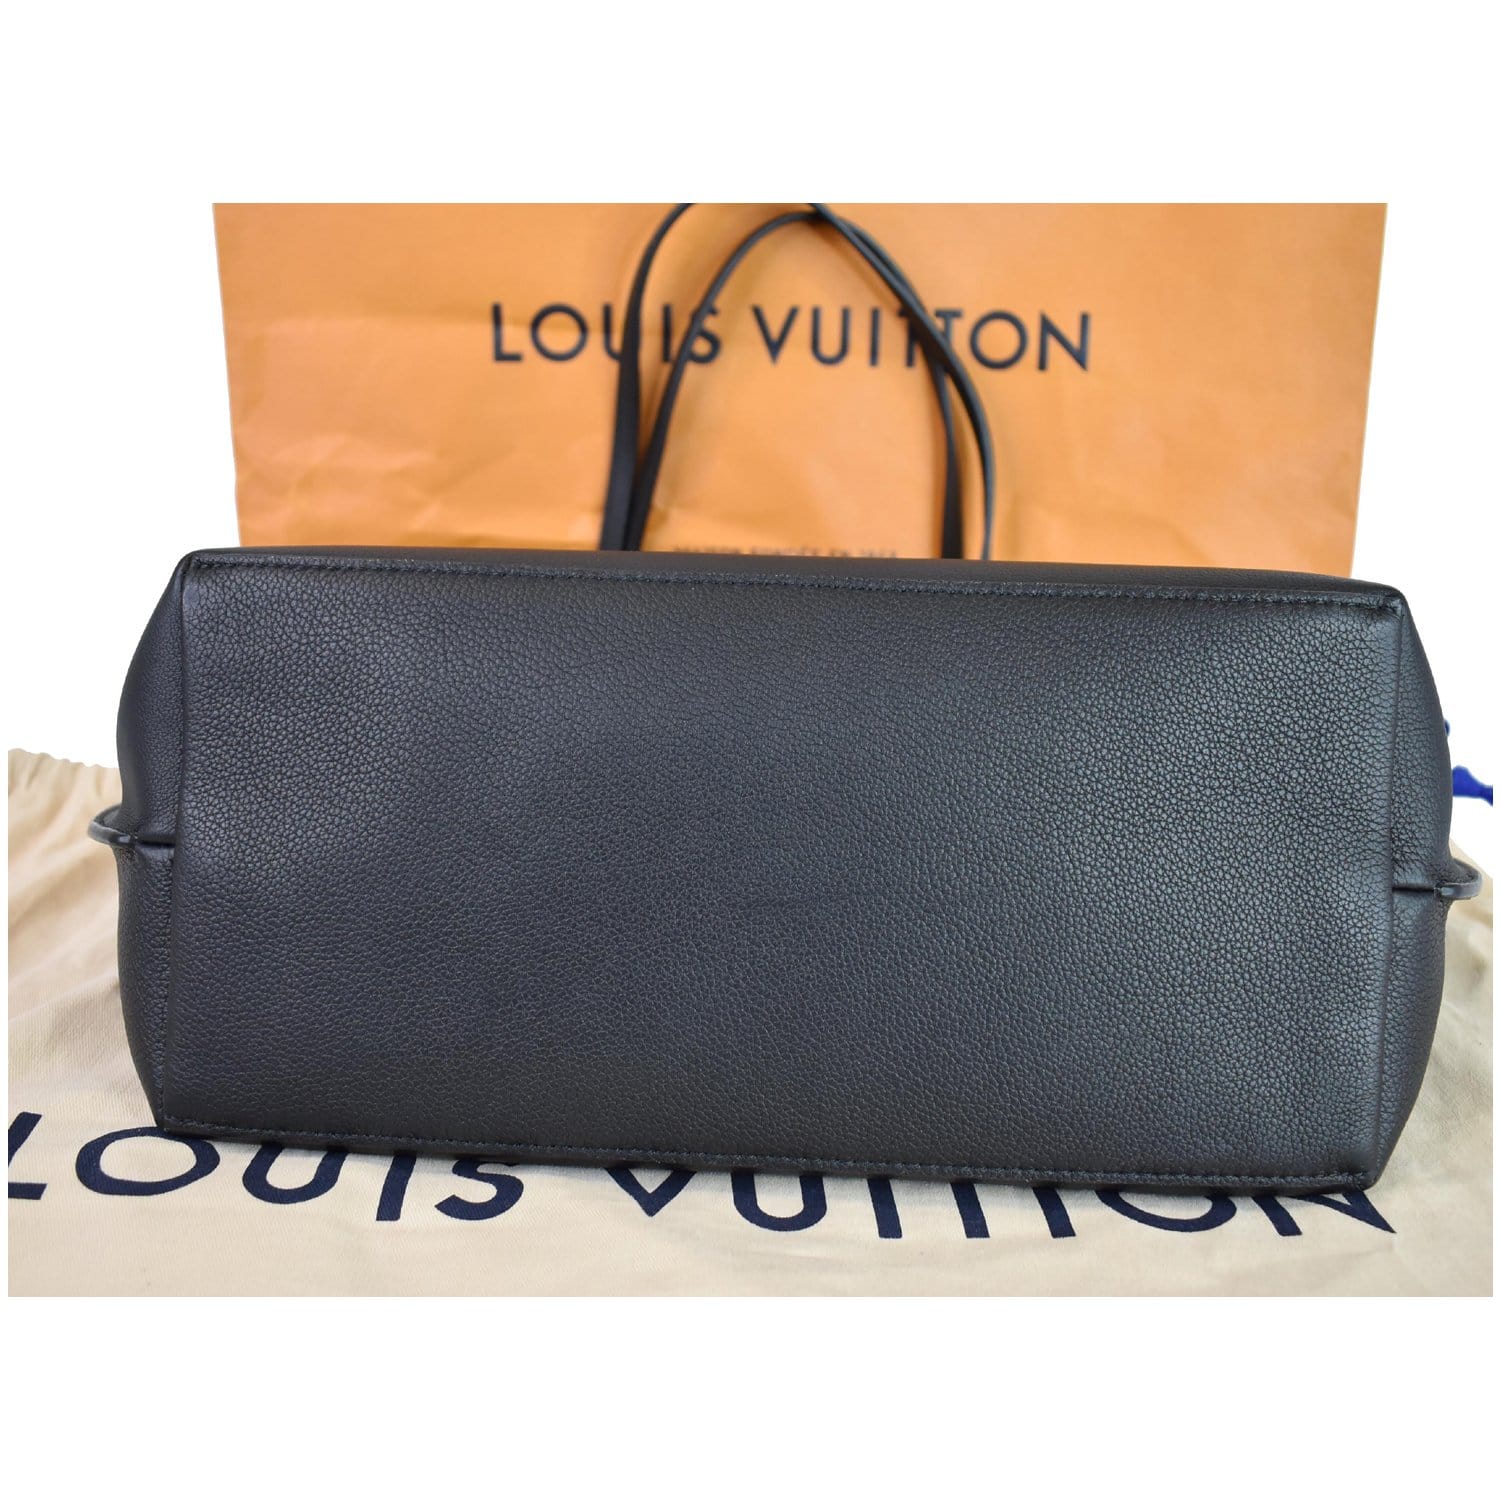 Louis Vuitton Black Calfskin Leather Lockme Shopper Tote Bag GHW